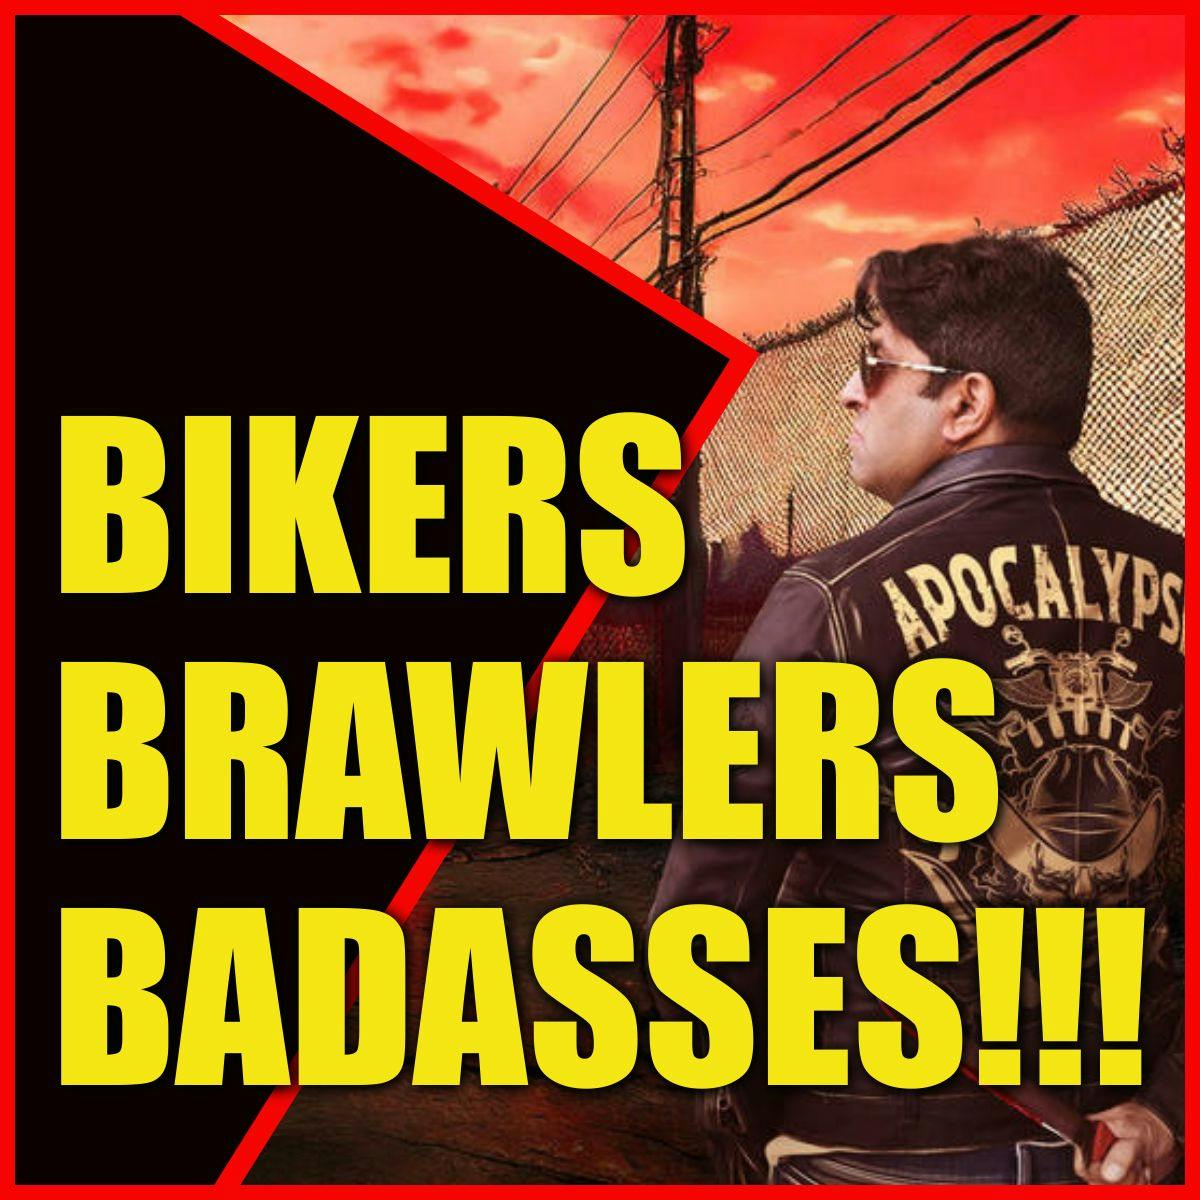 BIKERS BRAWLERS BADASSES!!!